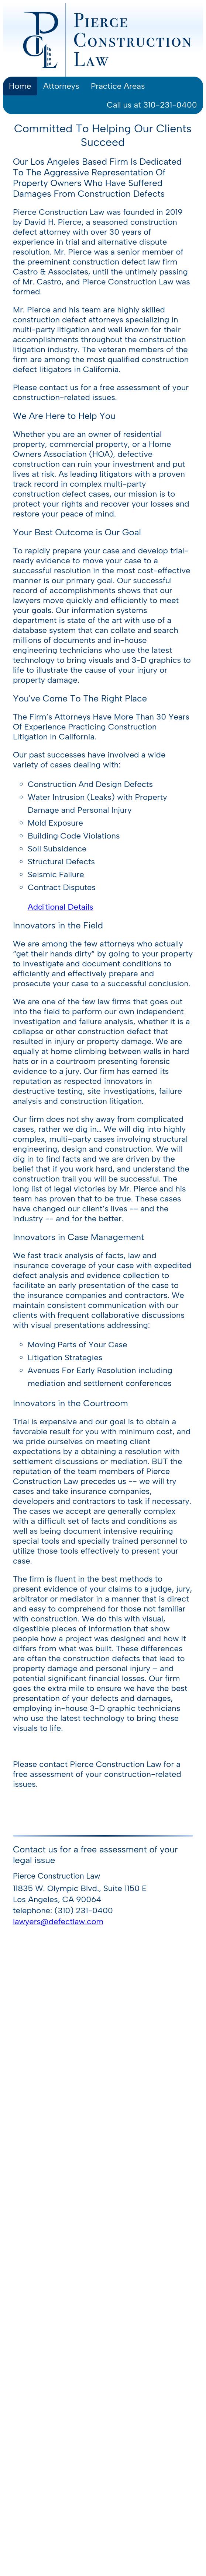 Castro & Associates - Los Angeles CA Lawyers